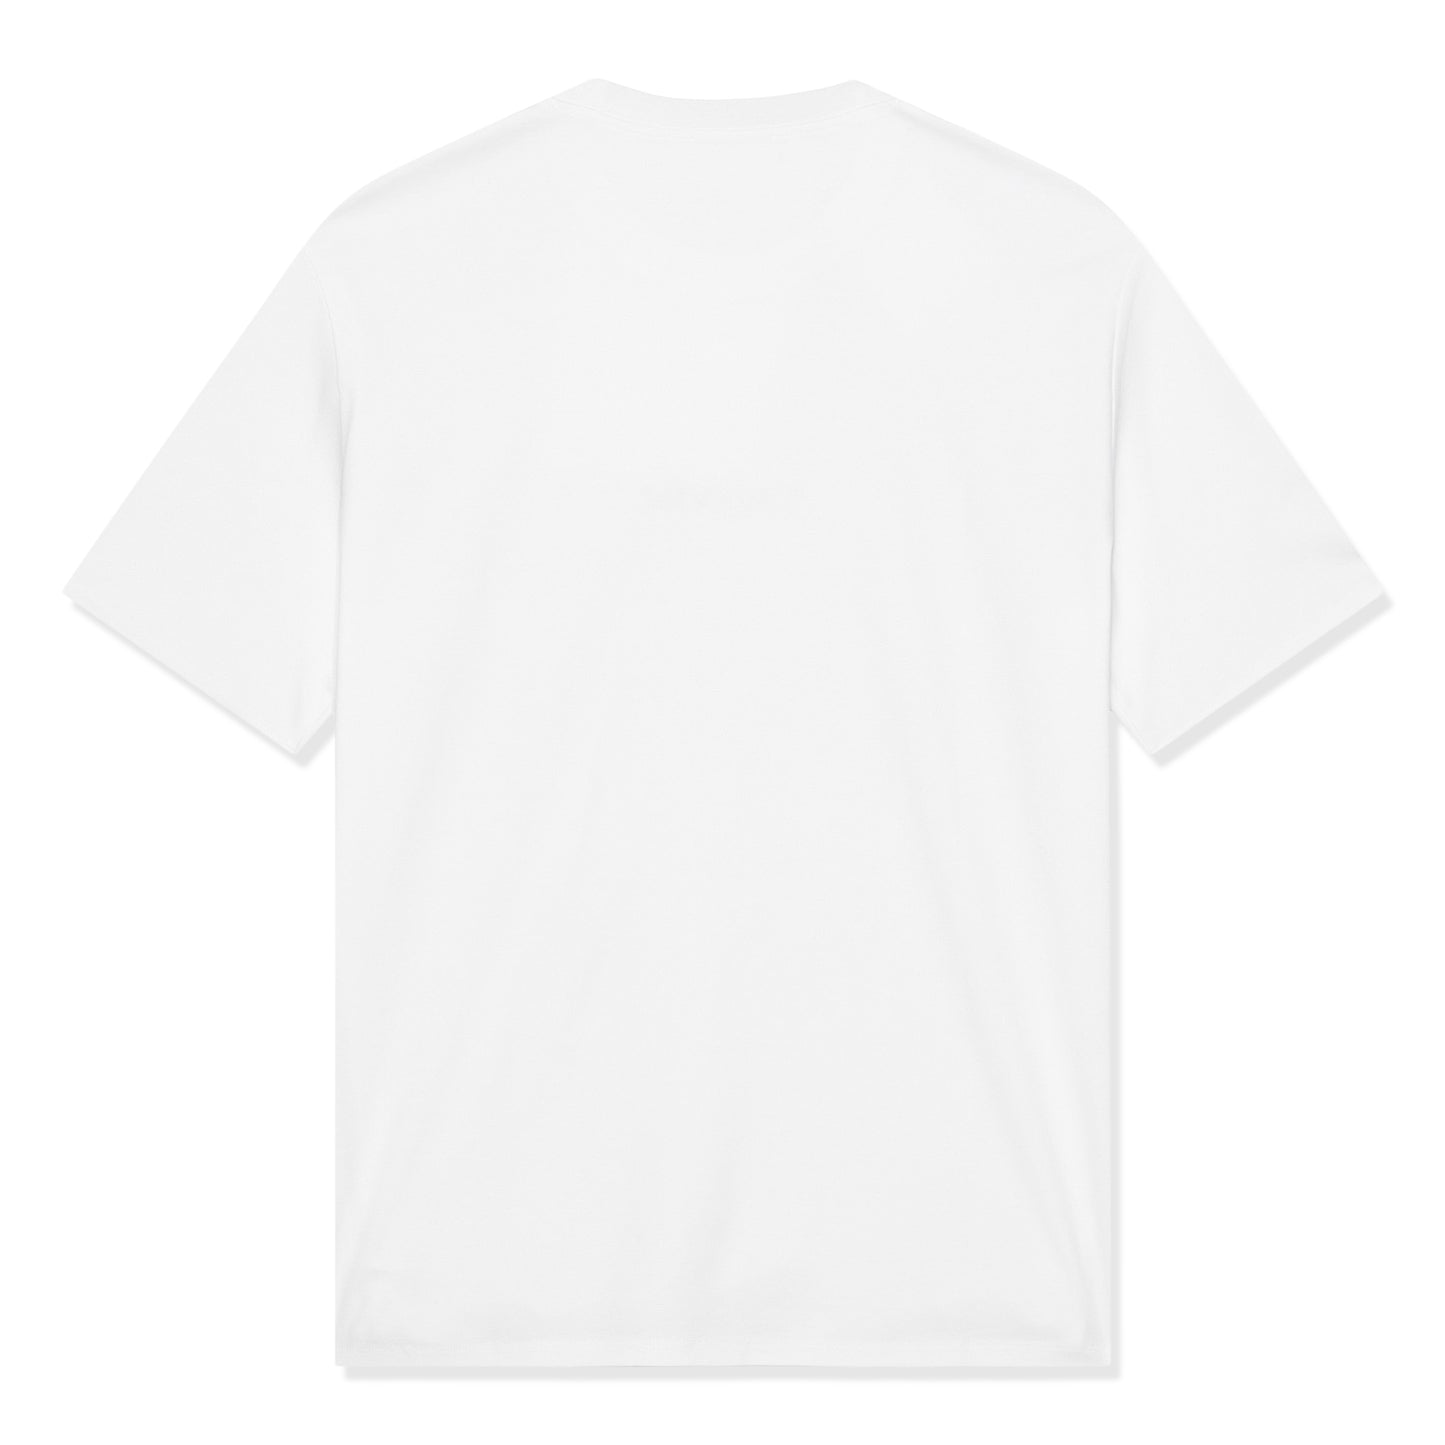 Lanvin Embroidered Regular T-Shirt (Optic White)